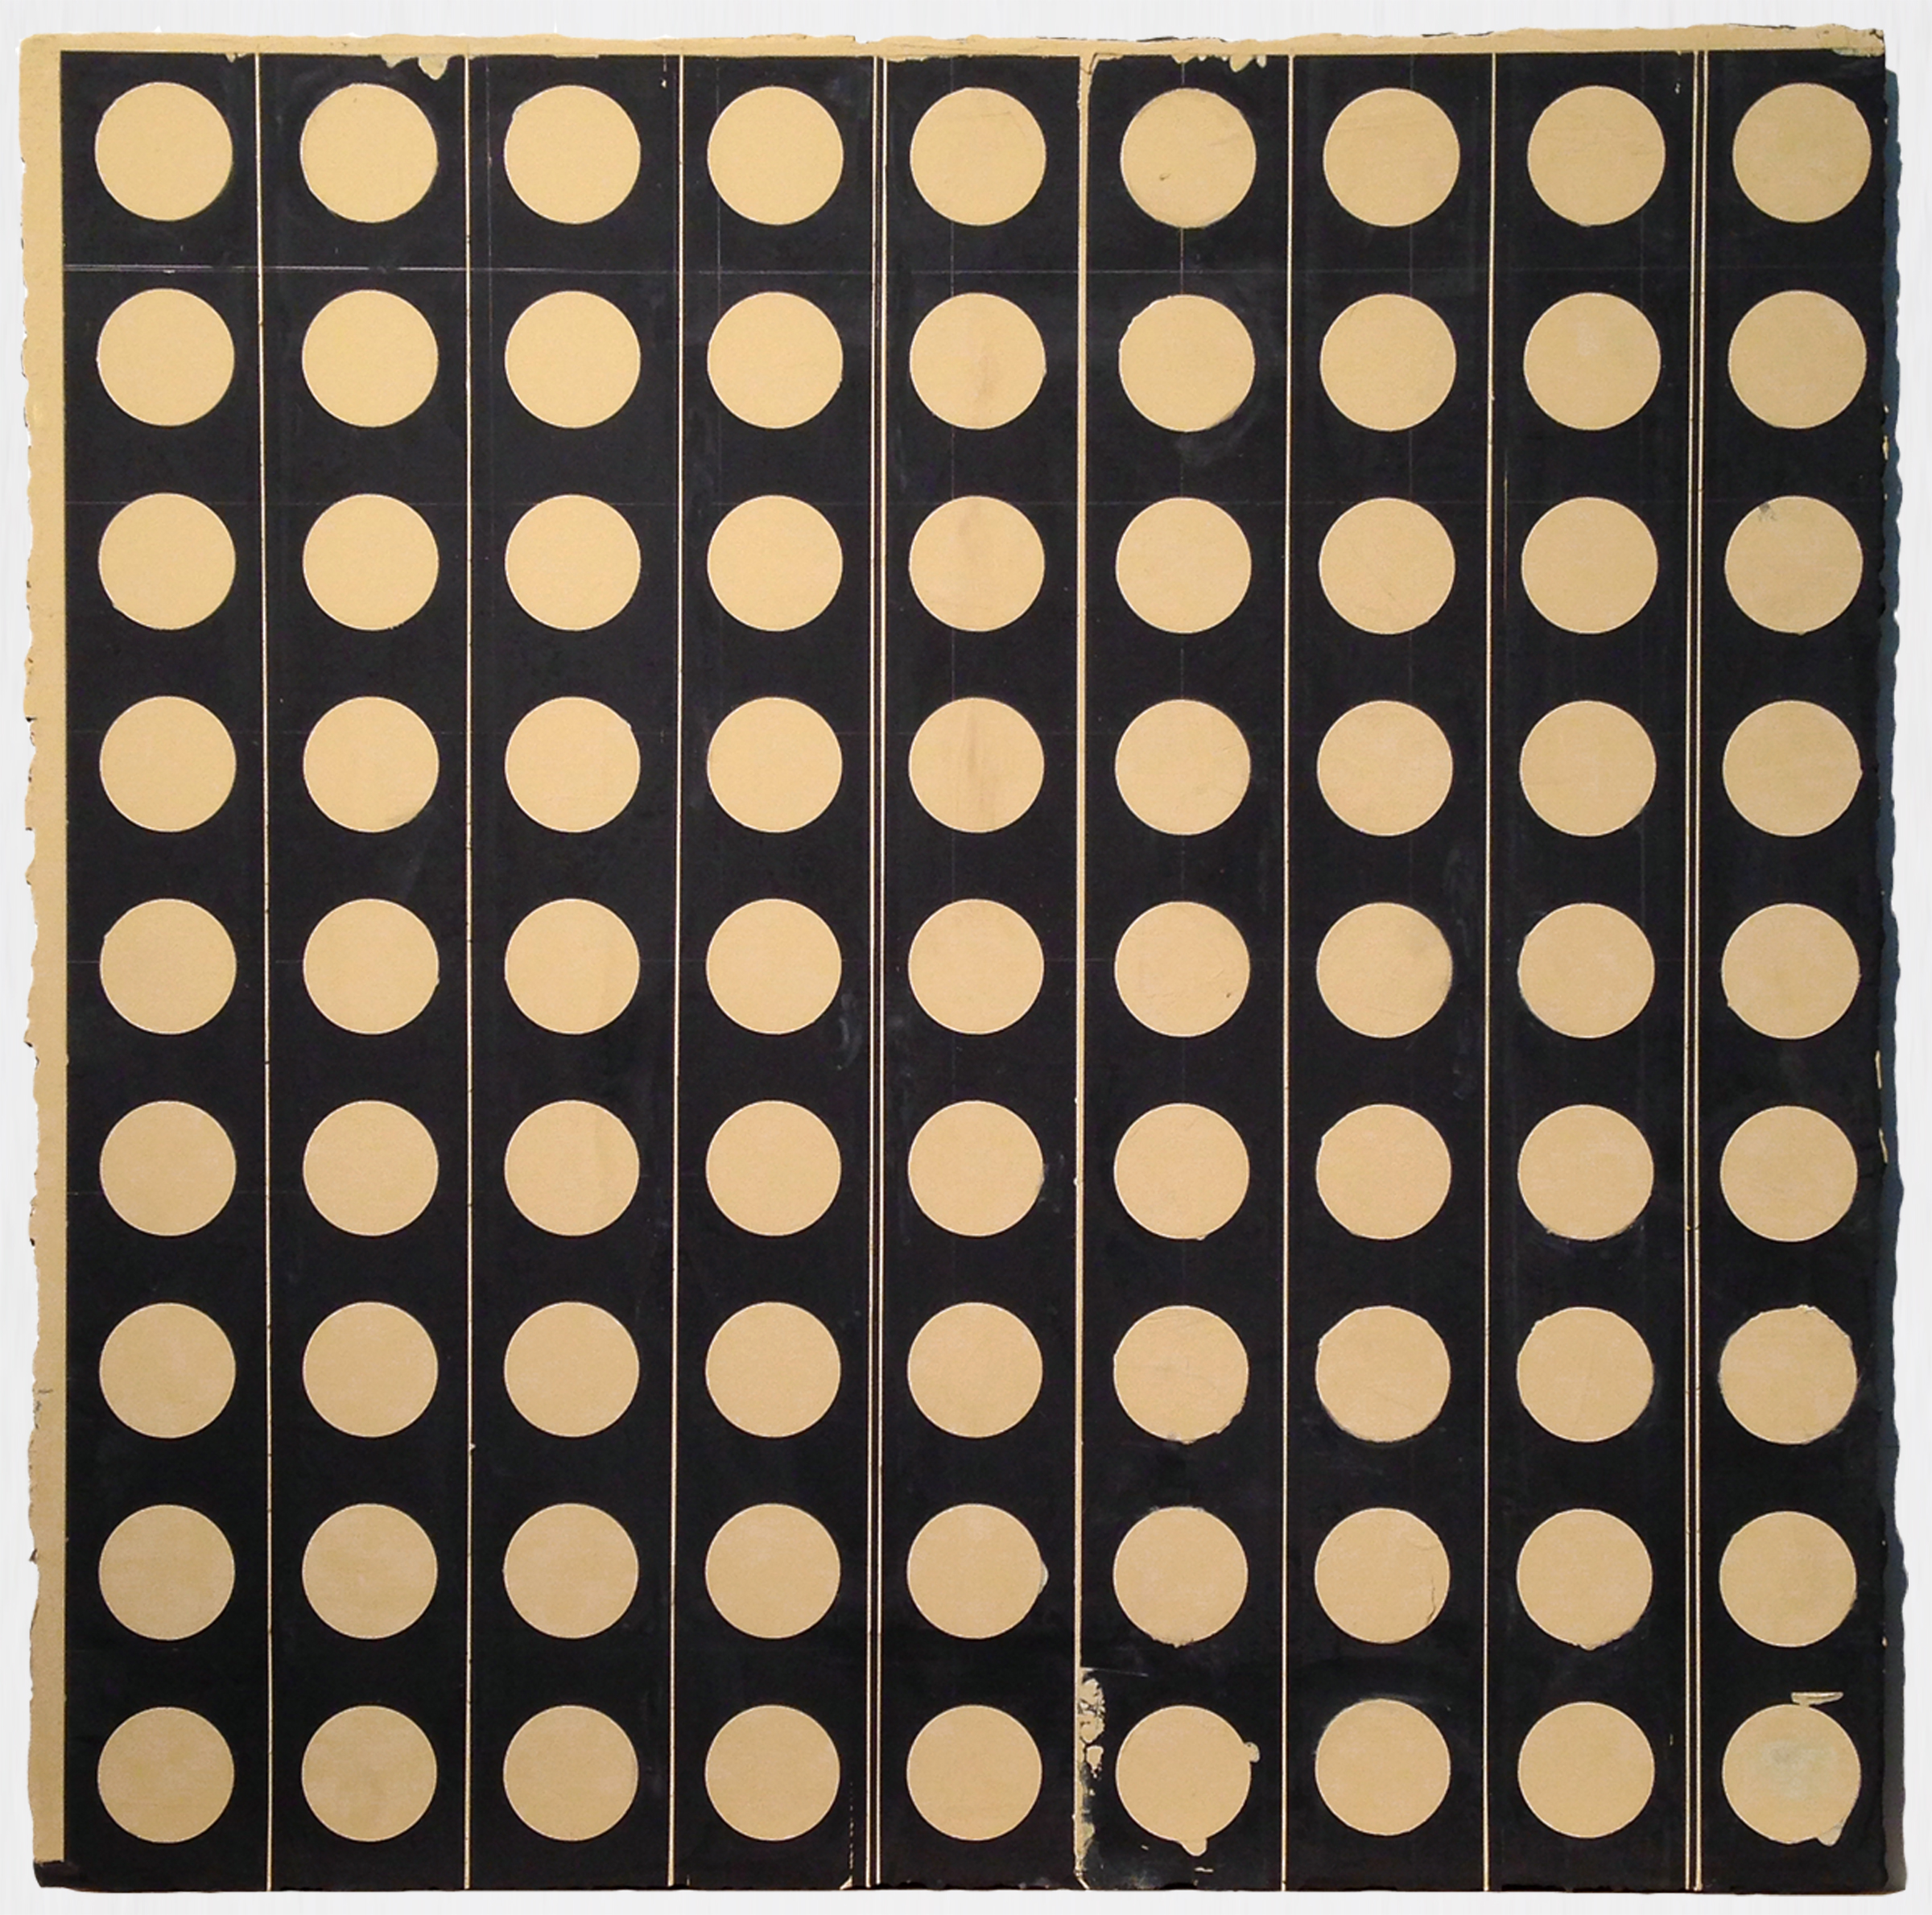   ELISE FERGUSON   Plink , pigmented plaster on MDF panel, 24" x 24", 2014 